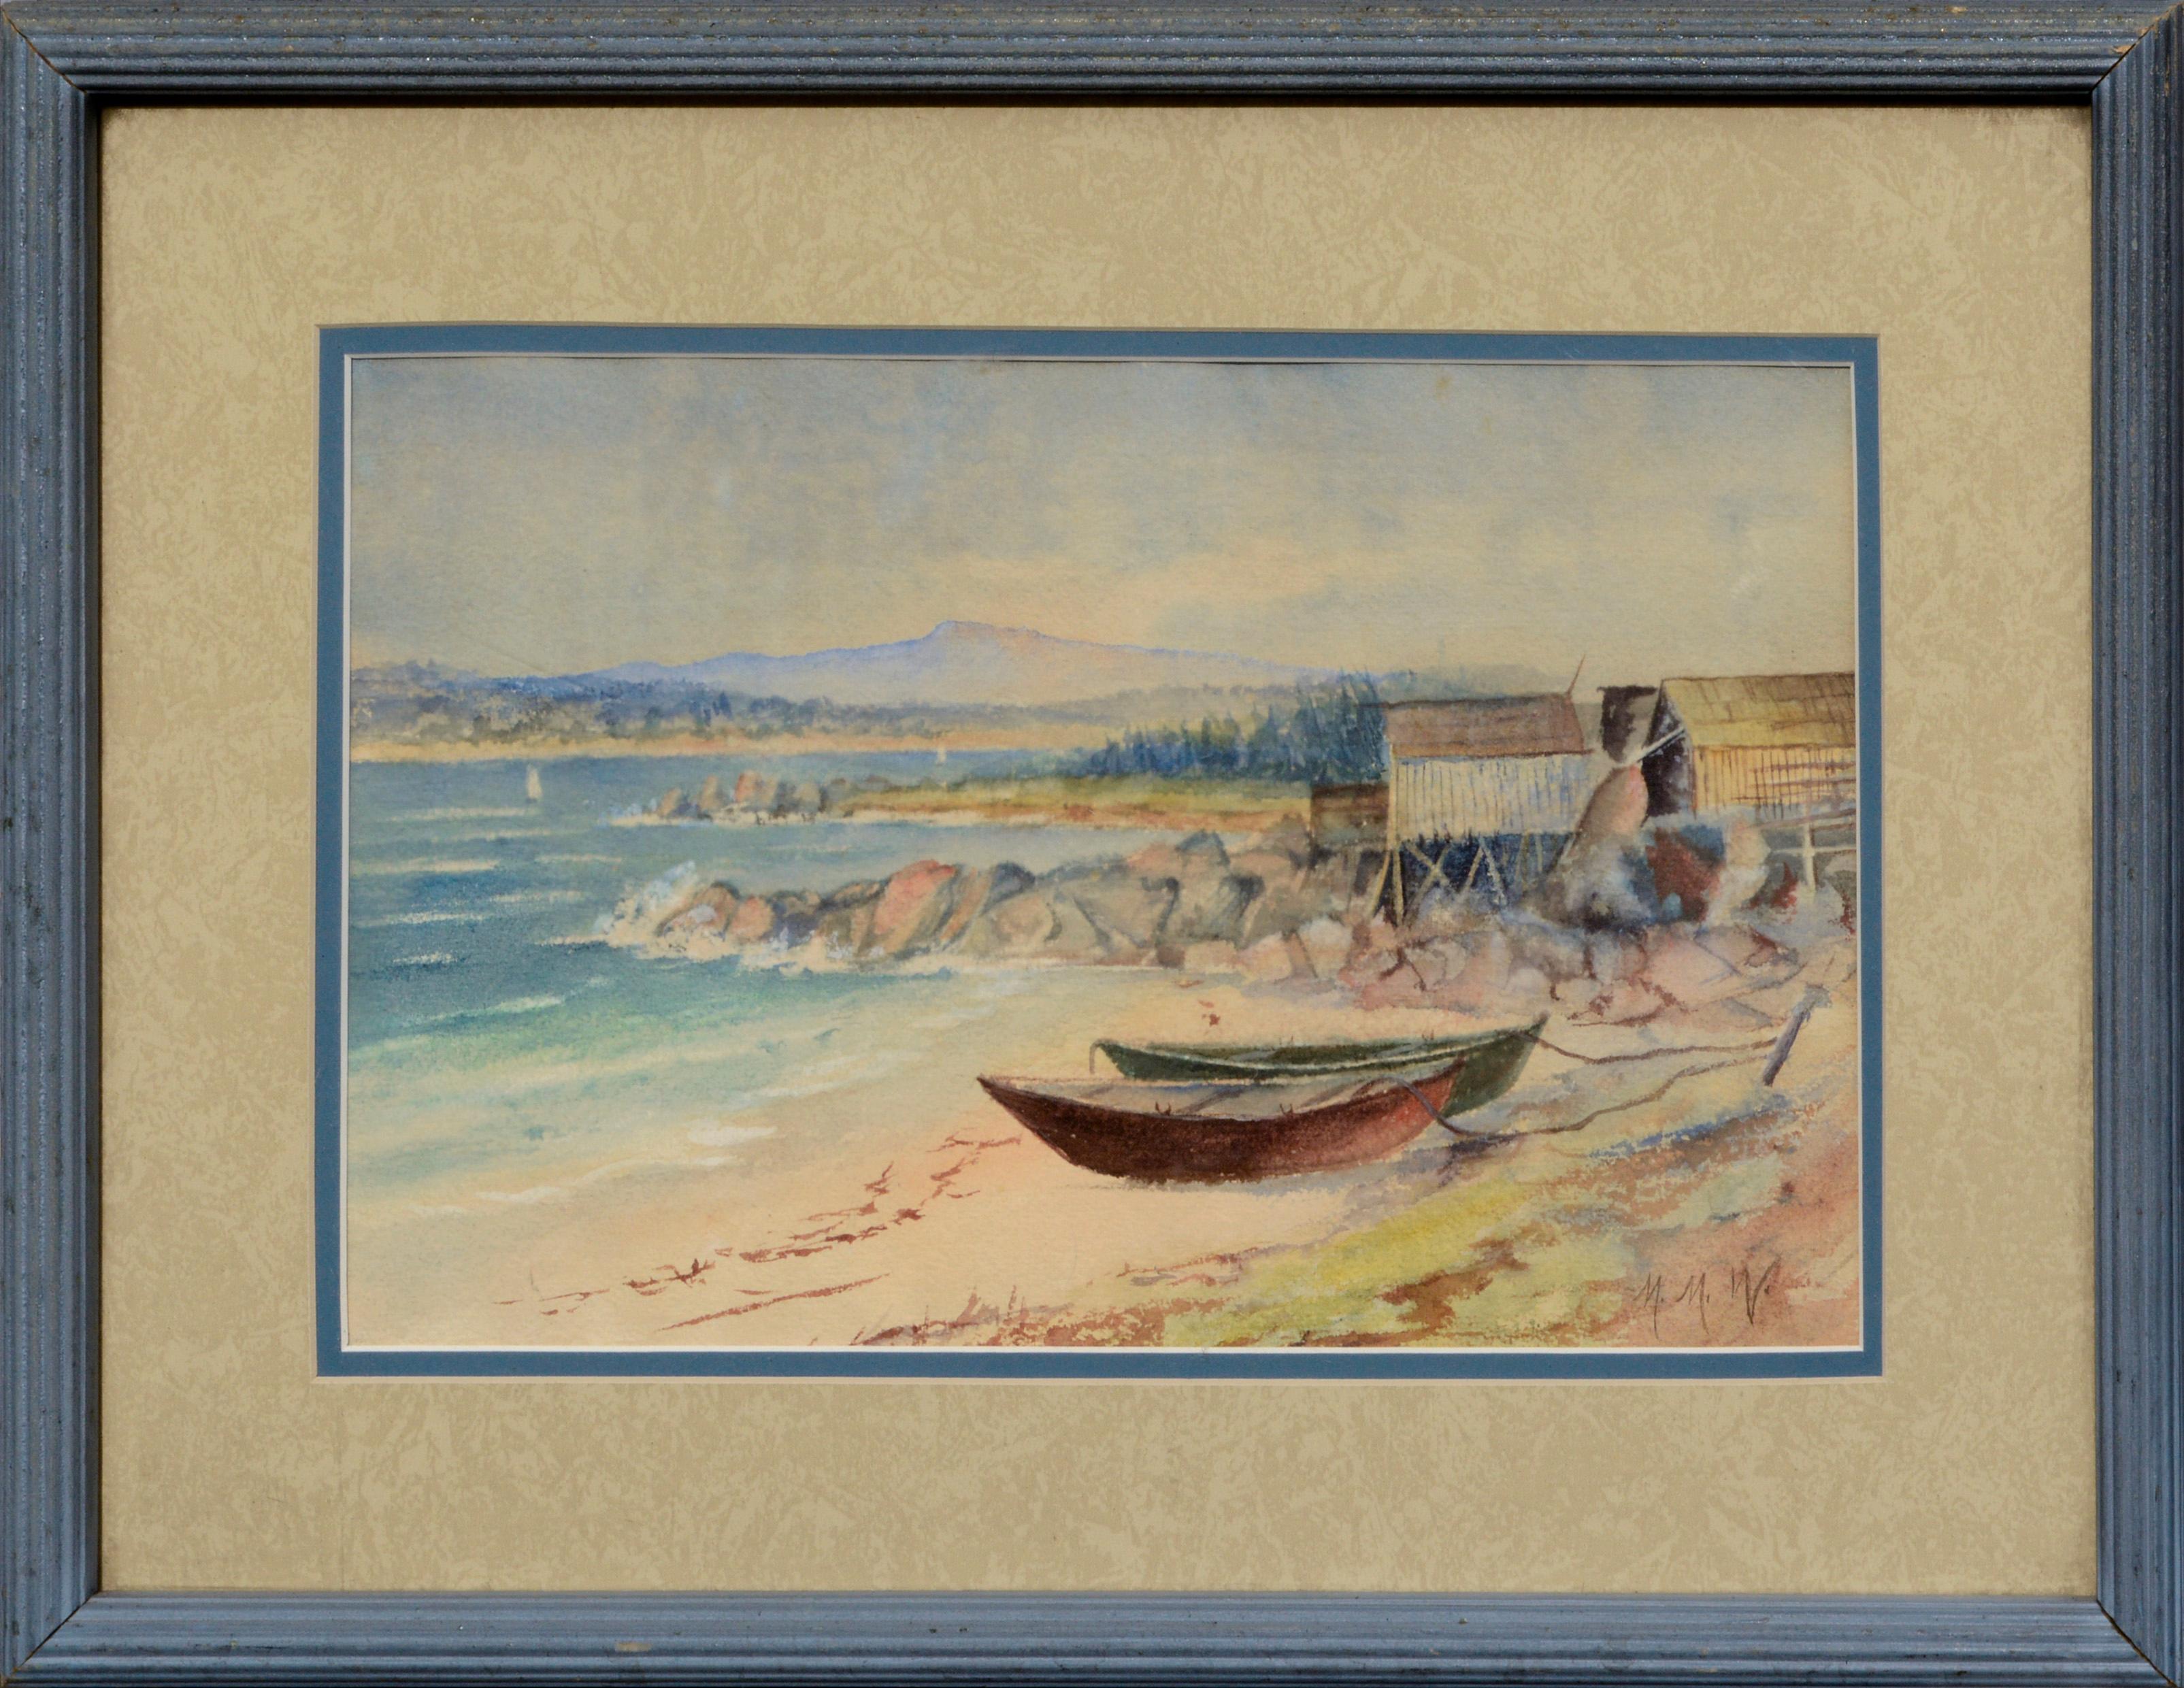 Melvena M. Benjamin Wade Landscape Art - "Boats at Low Tide", Early 20th Century Coastal Landscape Watercolor 